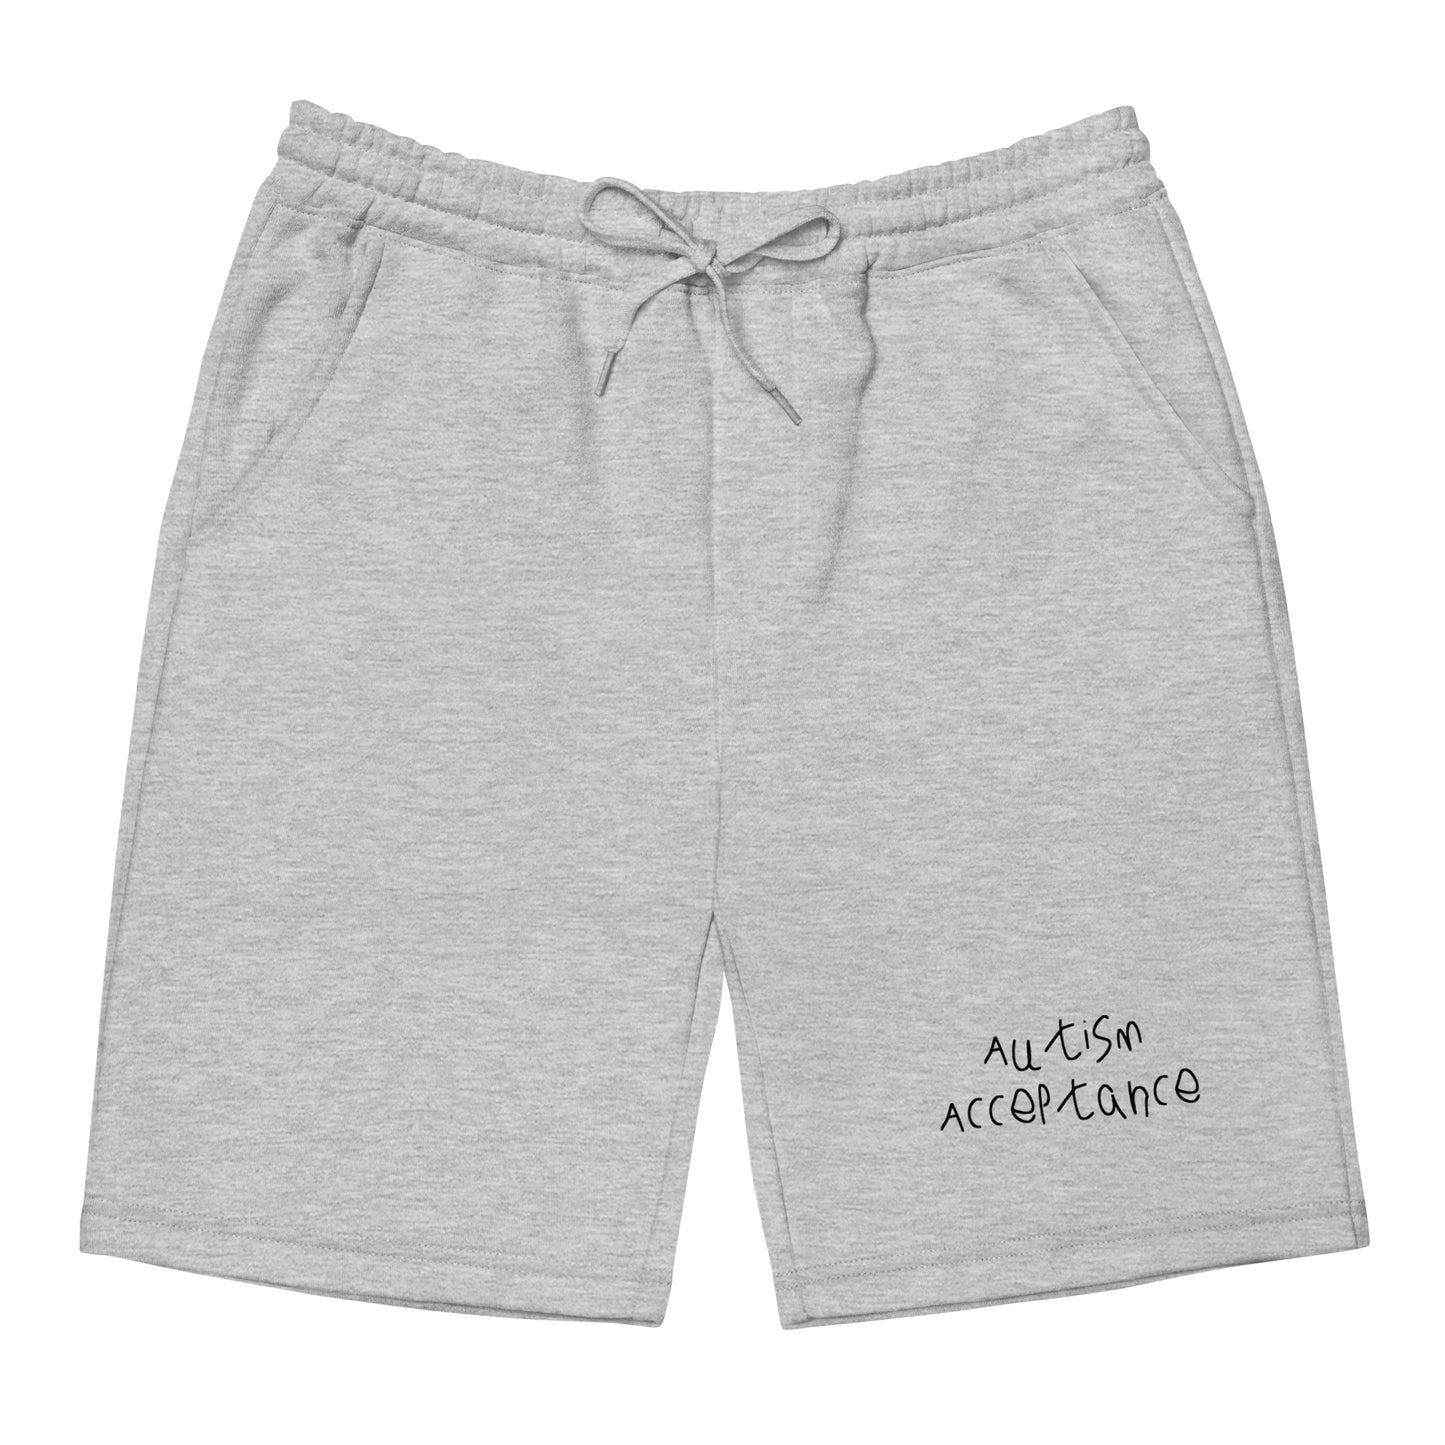 Autism Acceptance Fleece Shorts (Grey)